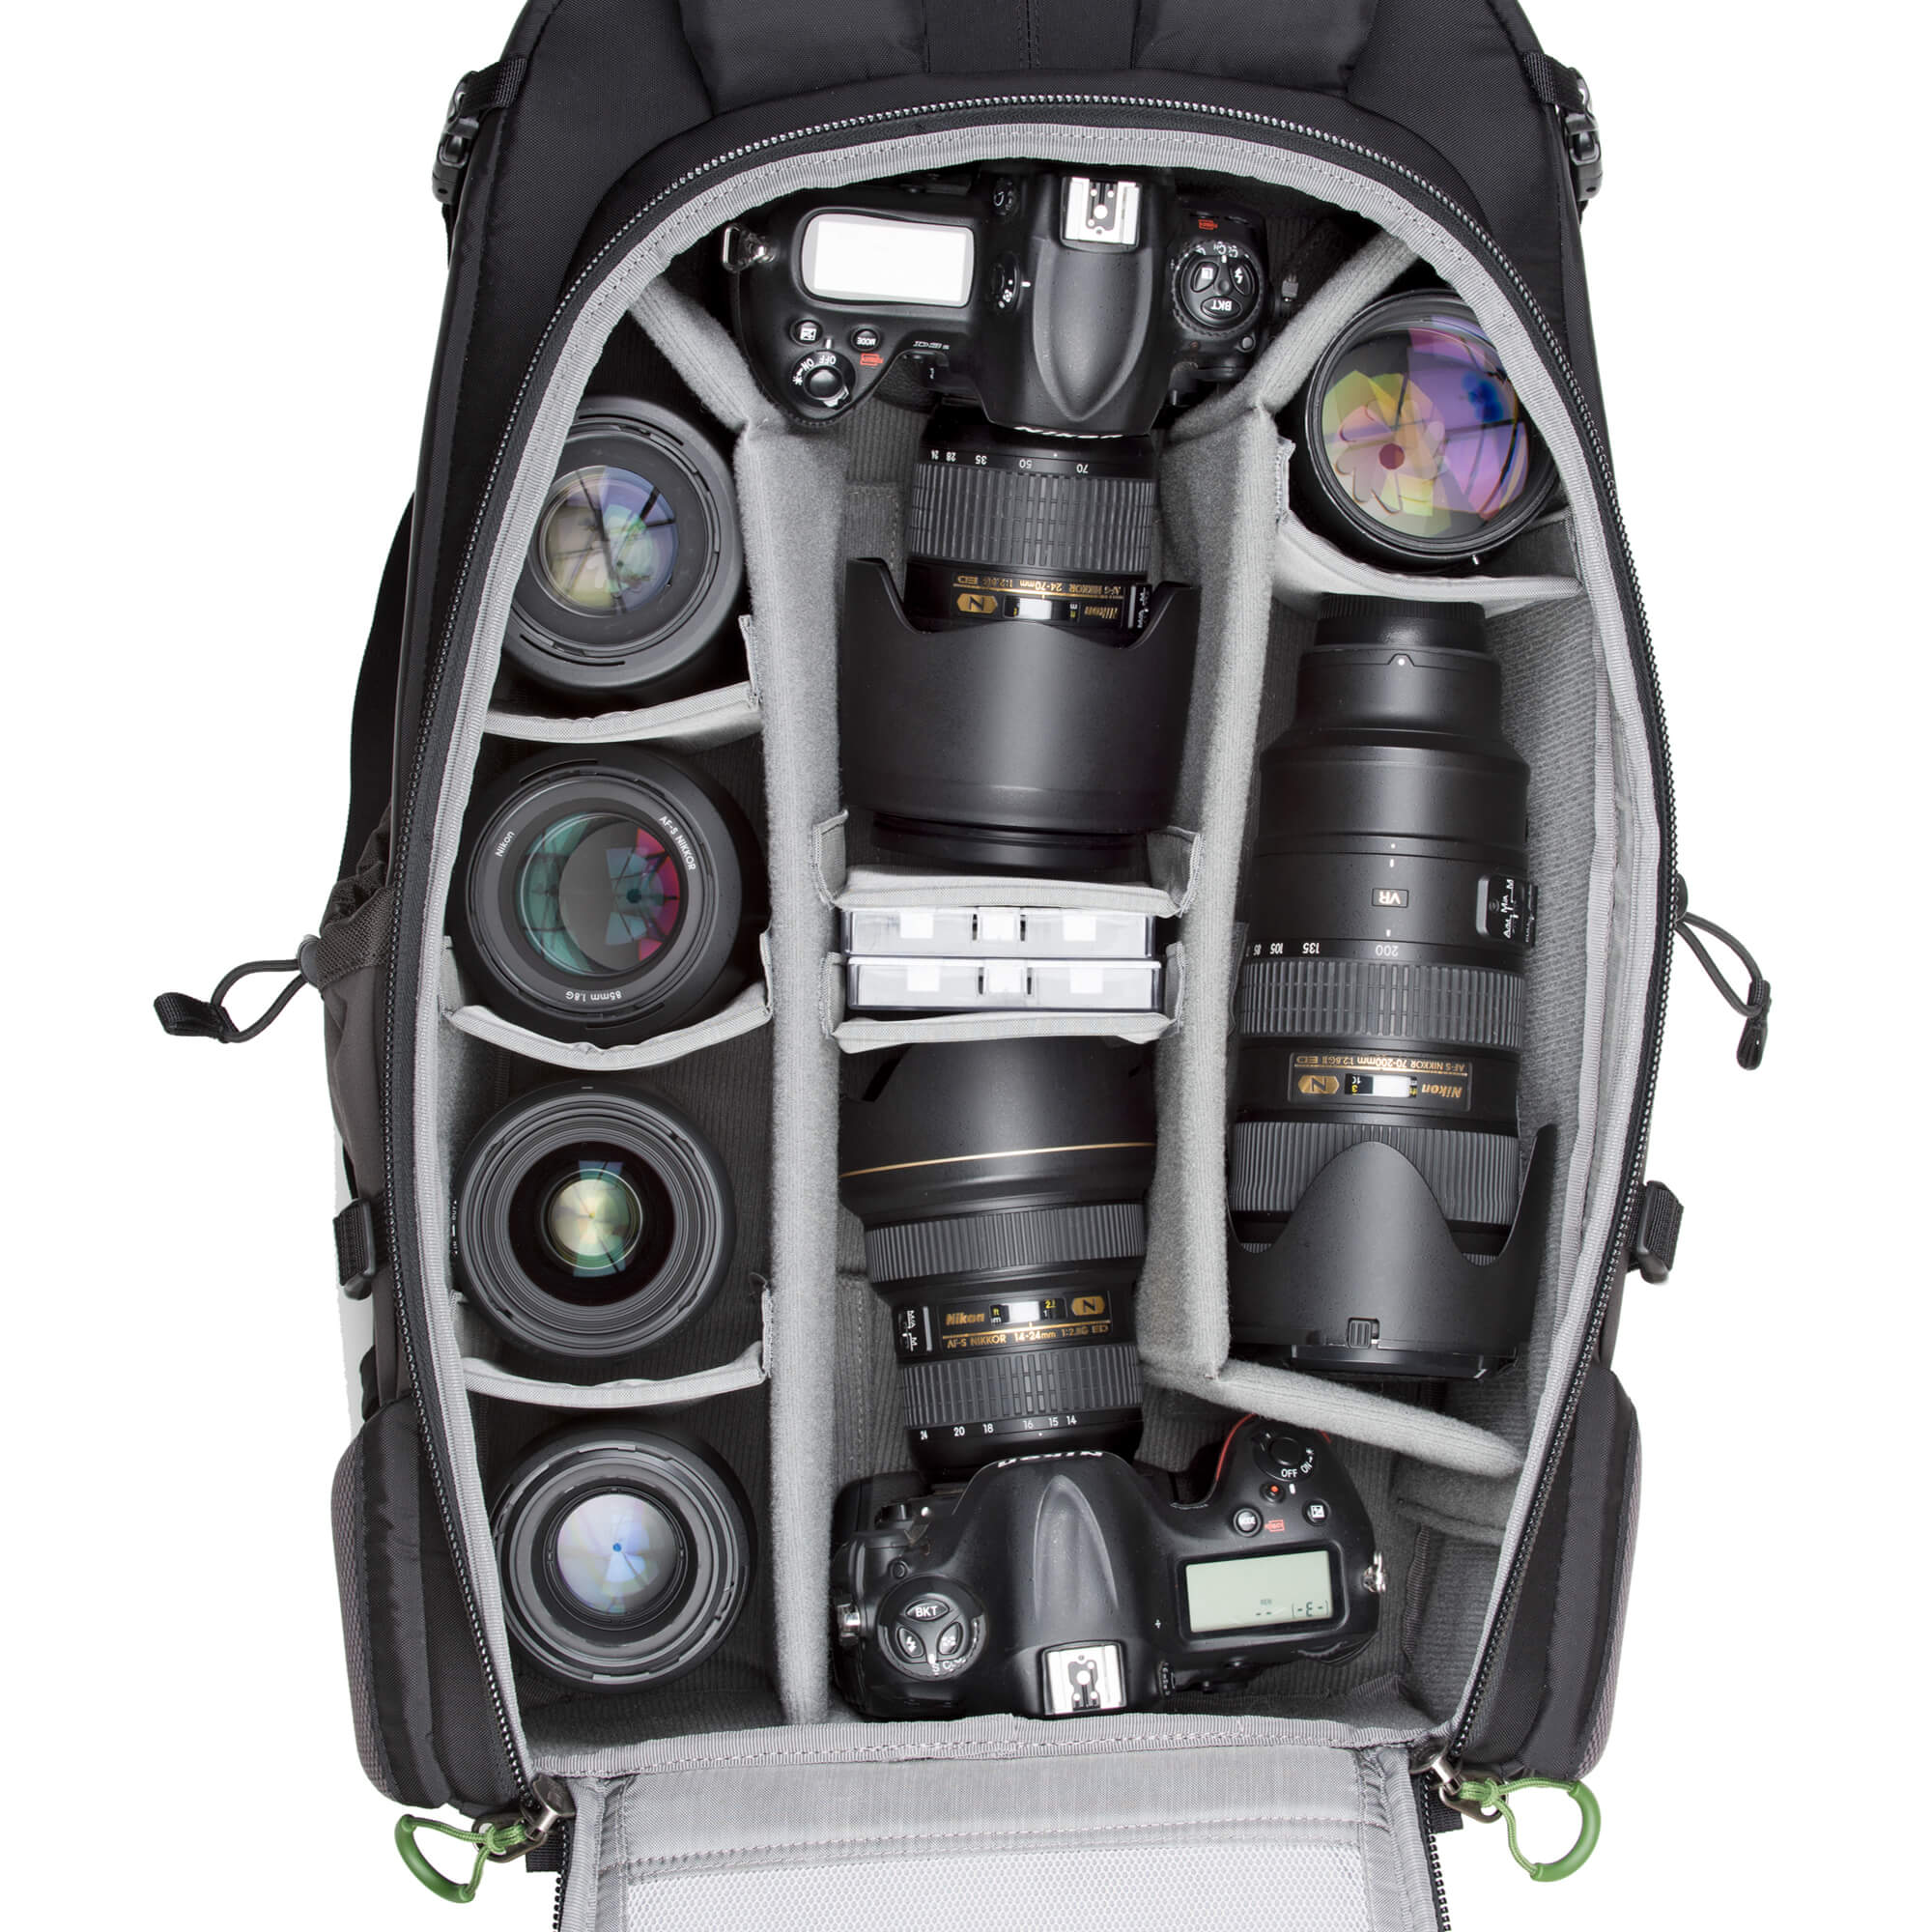 Backlight 36L Charcoal with Nikon D3S with 24-70mm f/2.8 attached, Nikon D4S with 14-24mm f/ 2.8 attached, 135mm f/2, 70-200mm f/2.8, 105mm f/2.8 macro, 85mm f/1.8, Sigma 35mm f/1.4 ART, 50mm f/1.4, filters